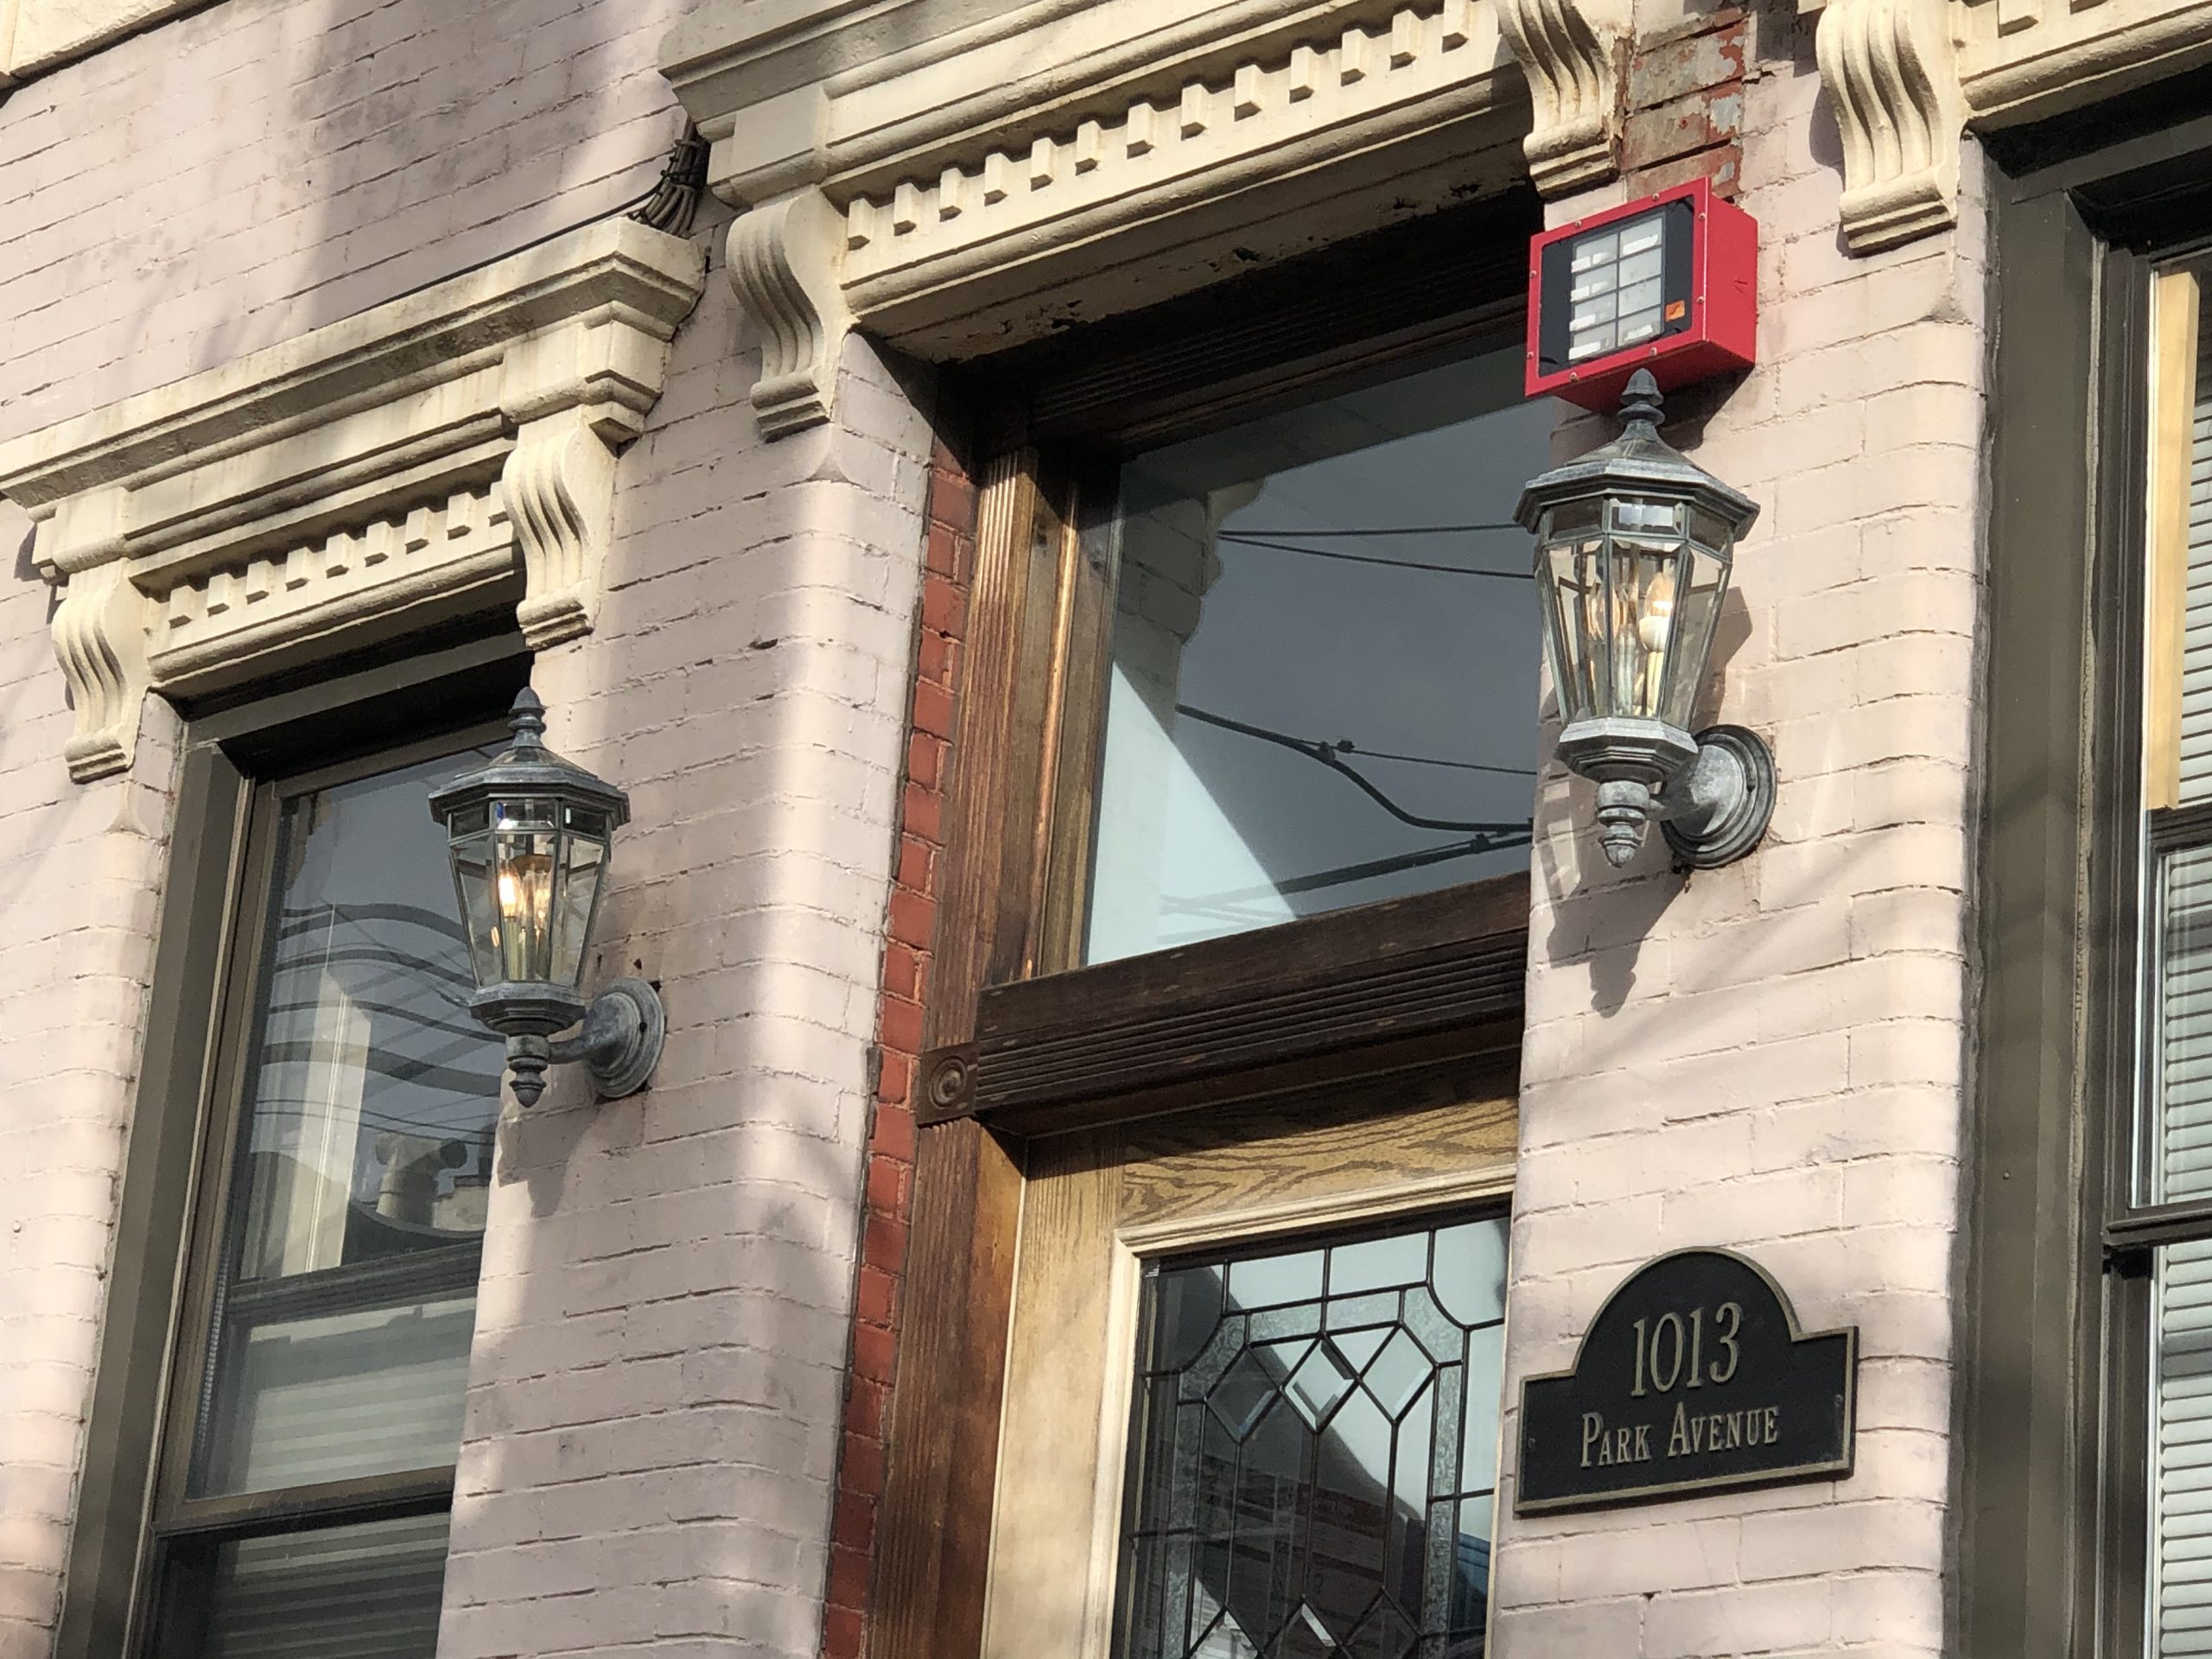 Kichler lantern 1013 Park Place Hoboken NJ